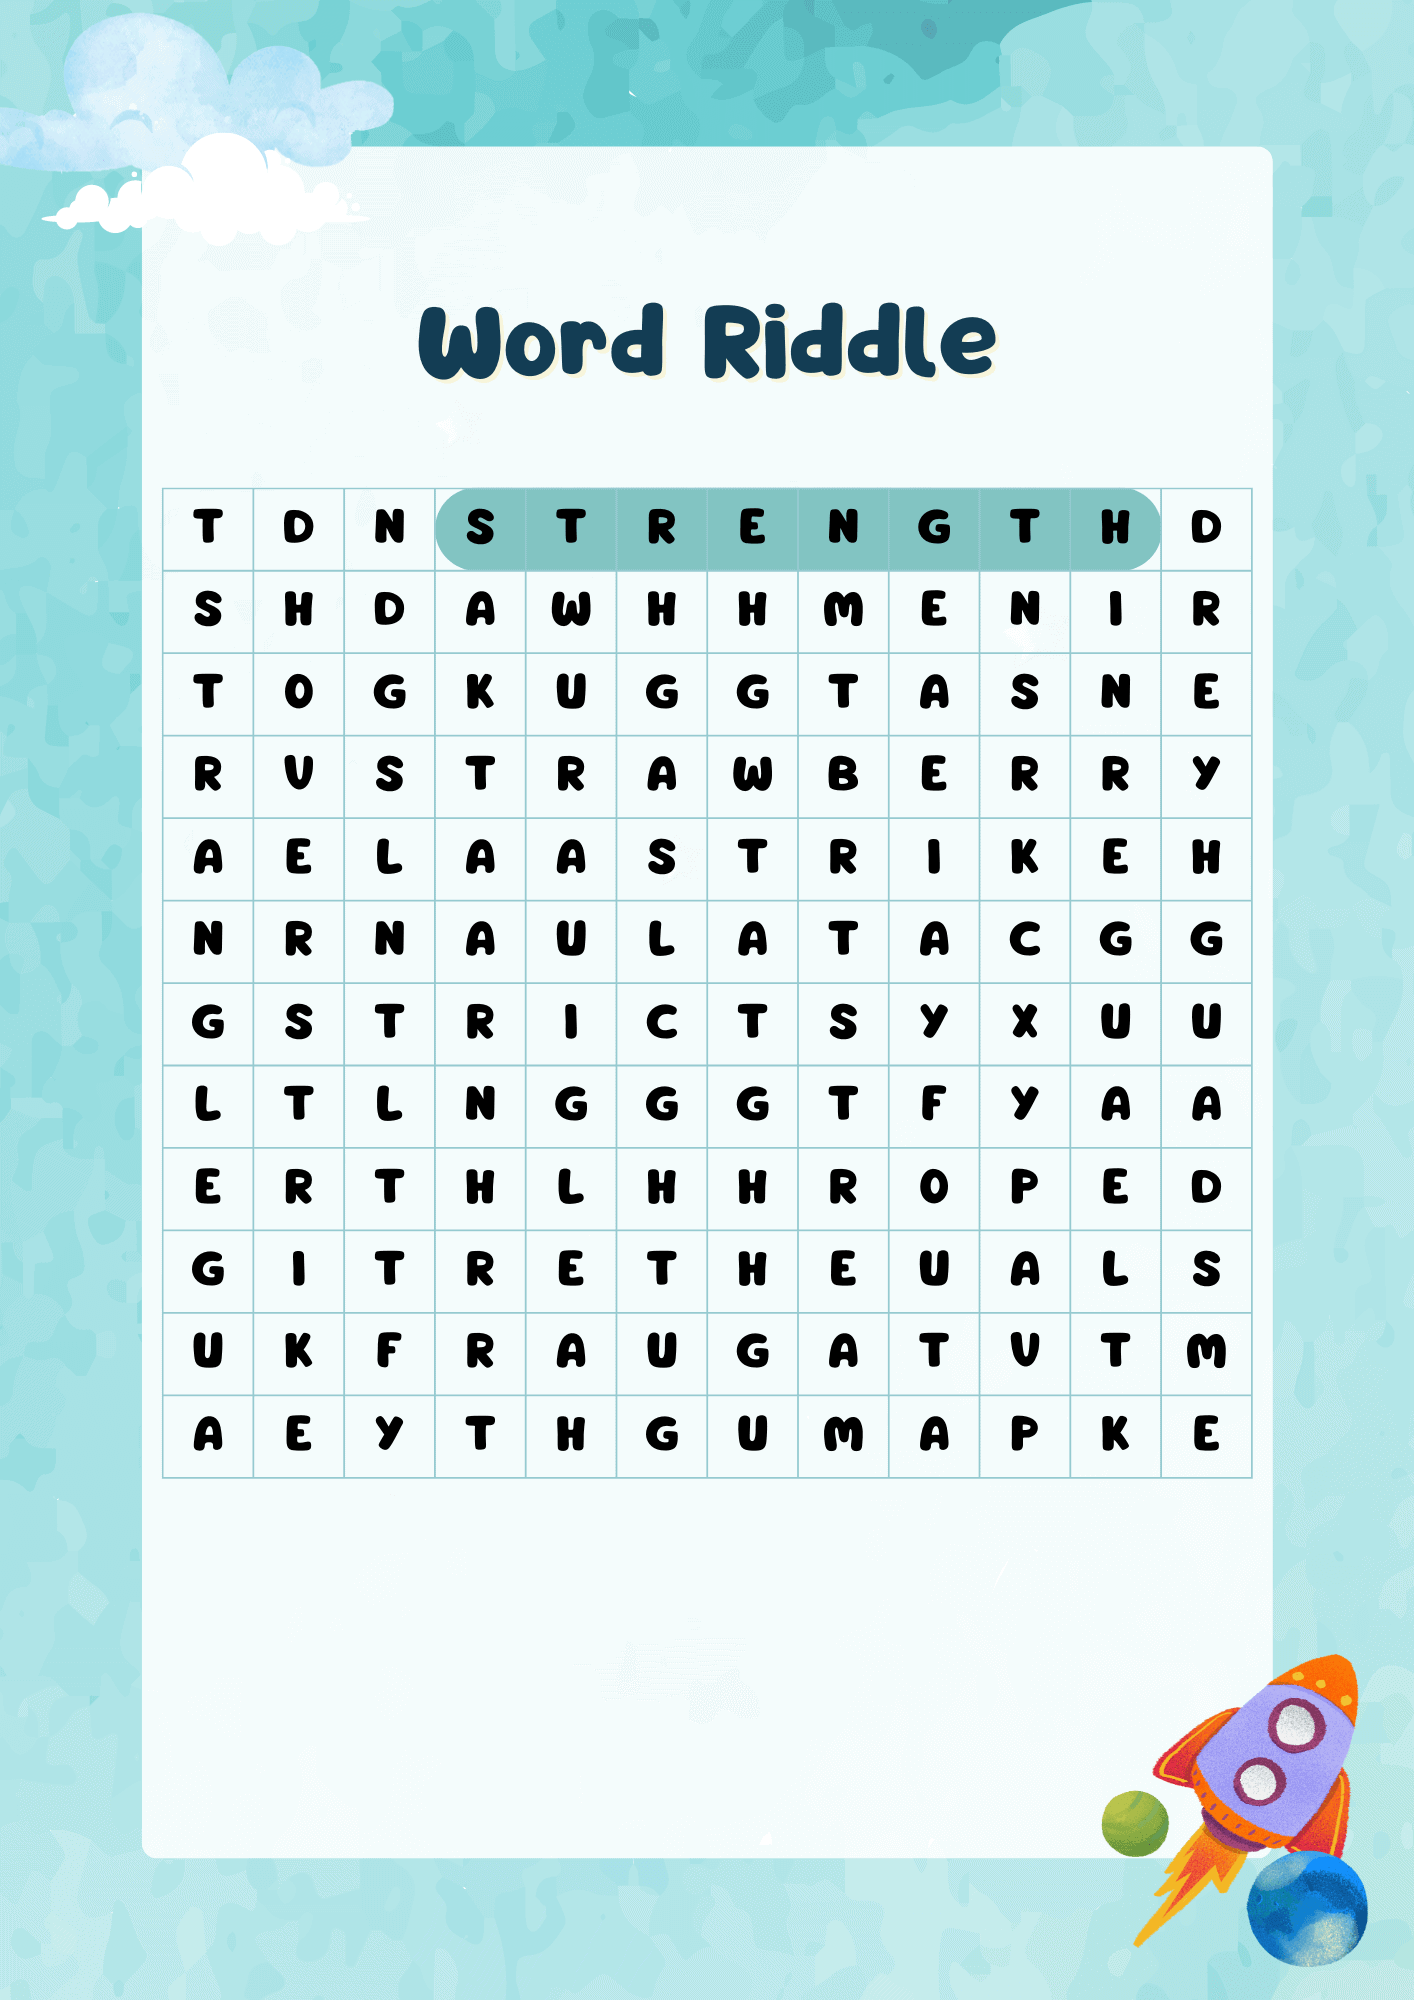 Solving Word Riddle to Find Str Words